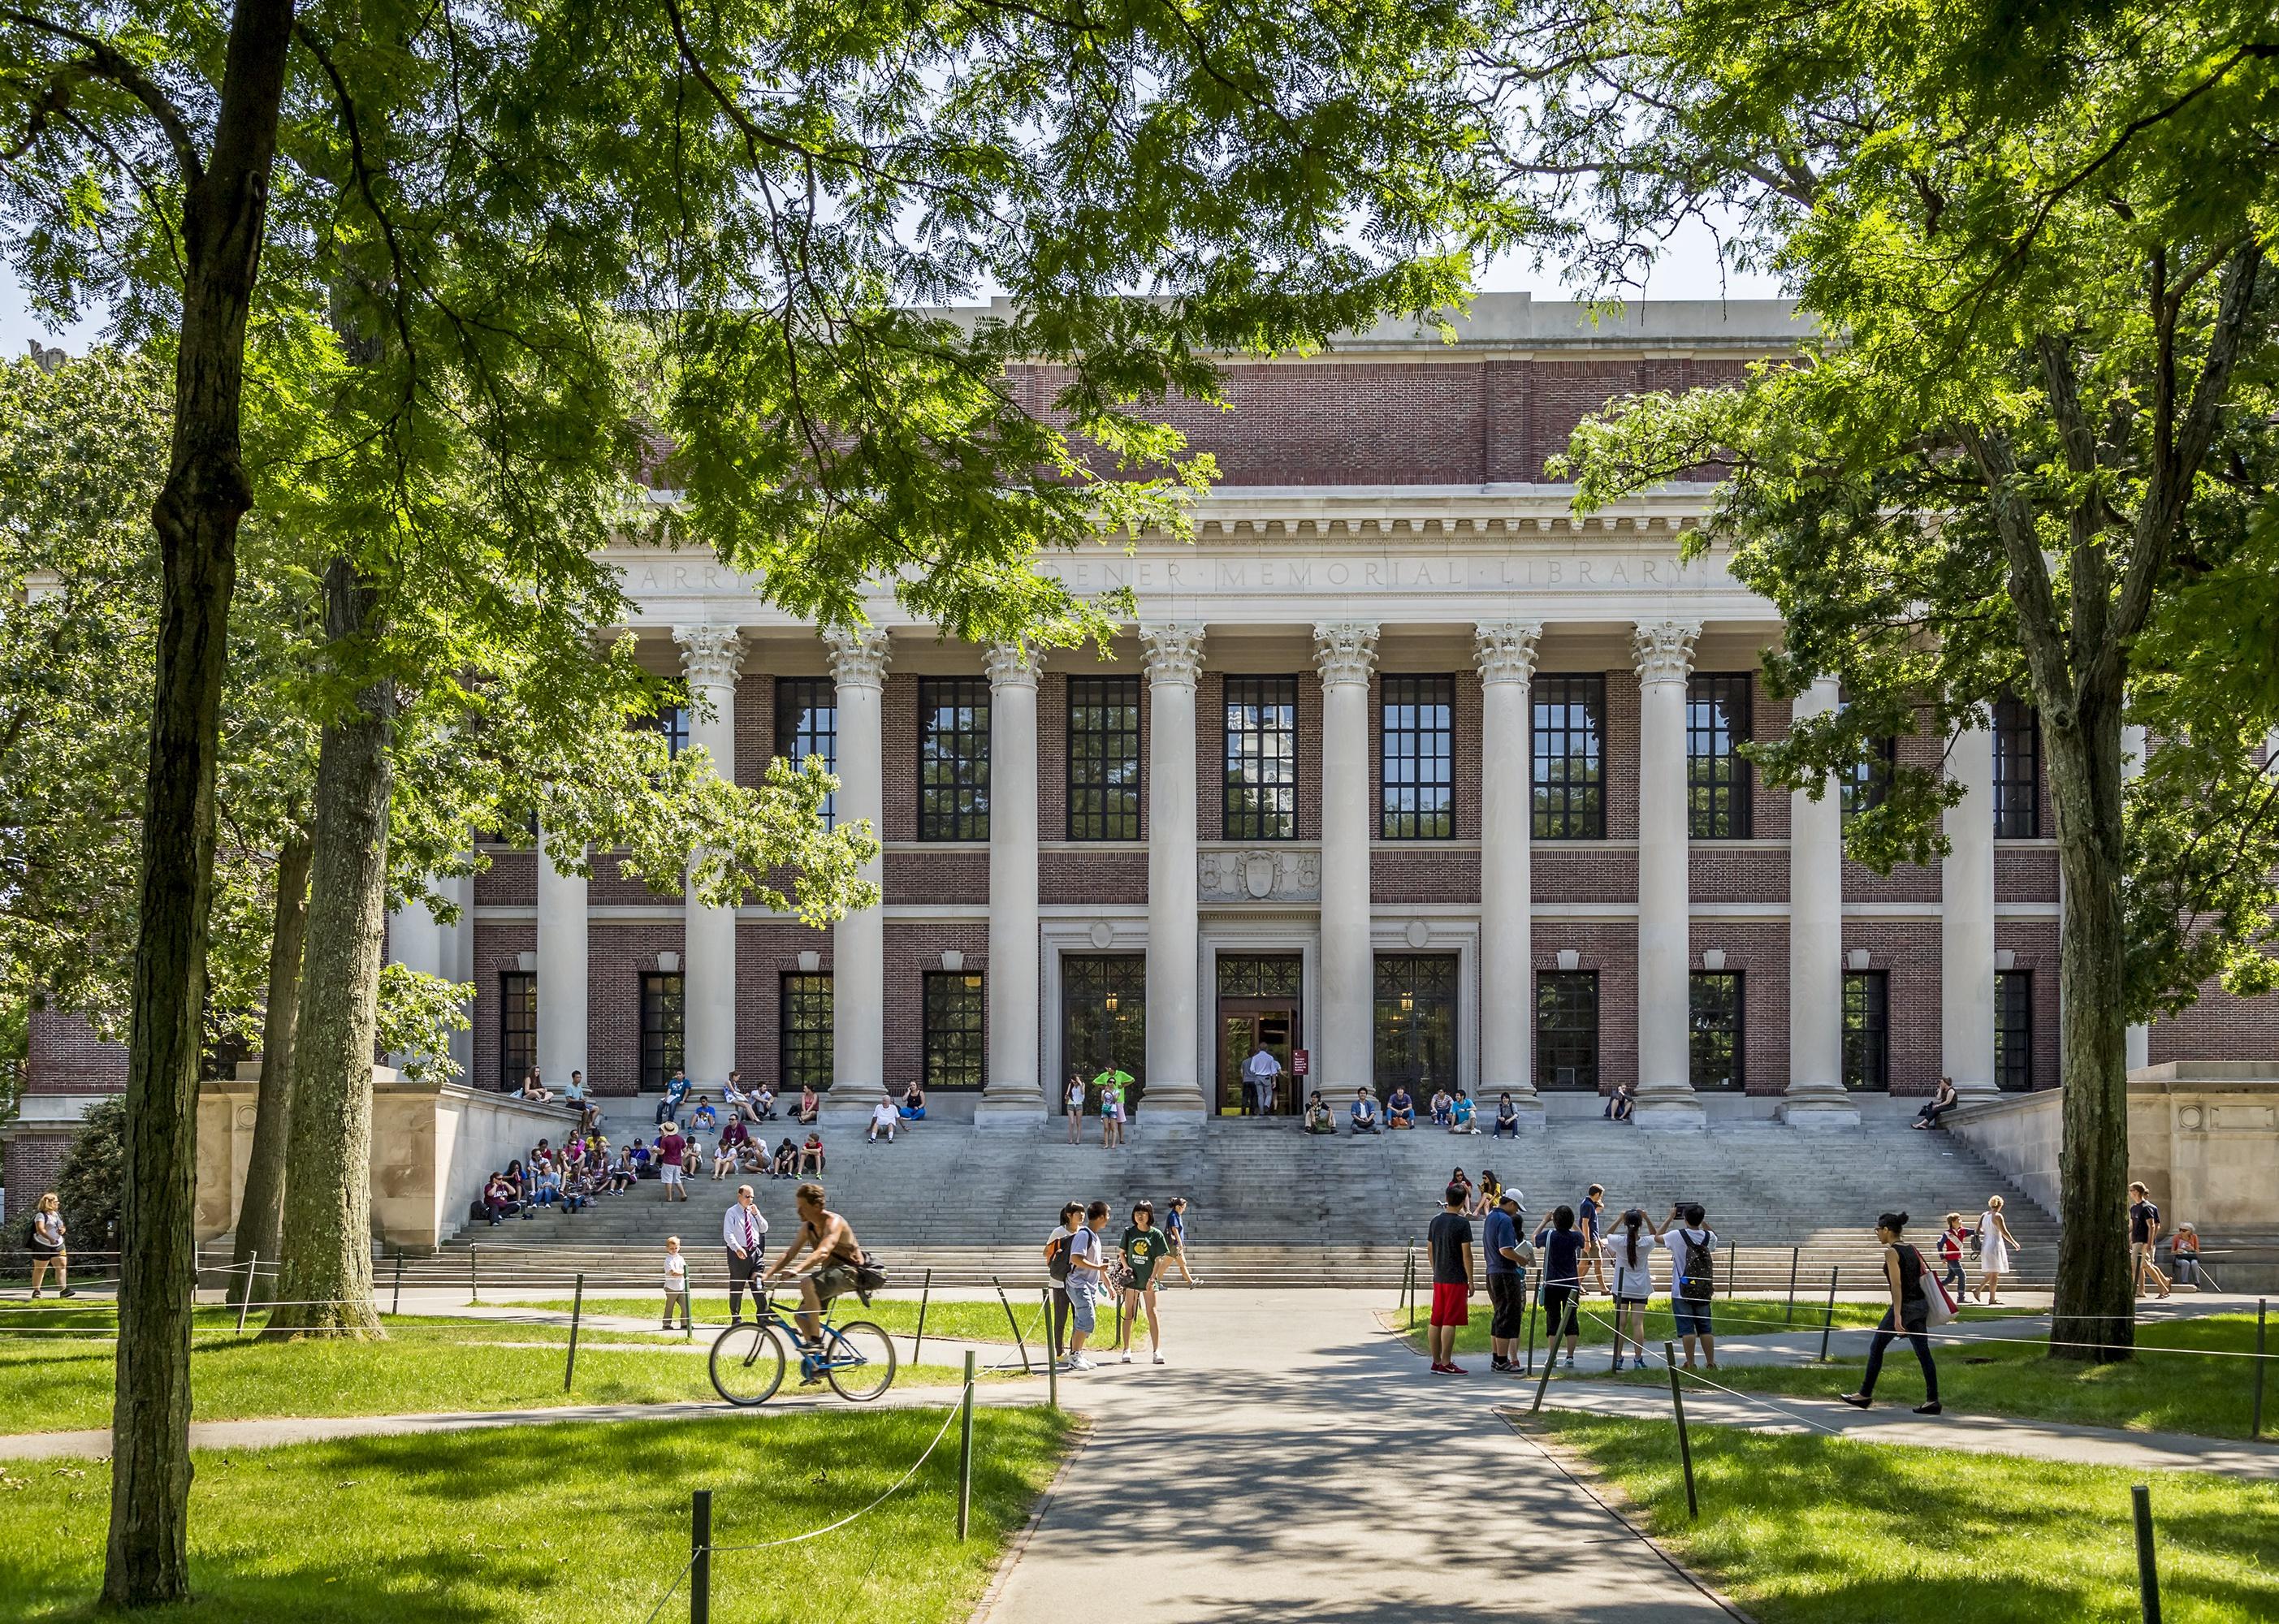 Panorama of the Harvard University's campus in Cambridge.